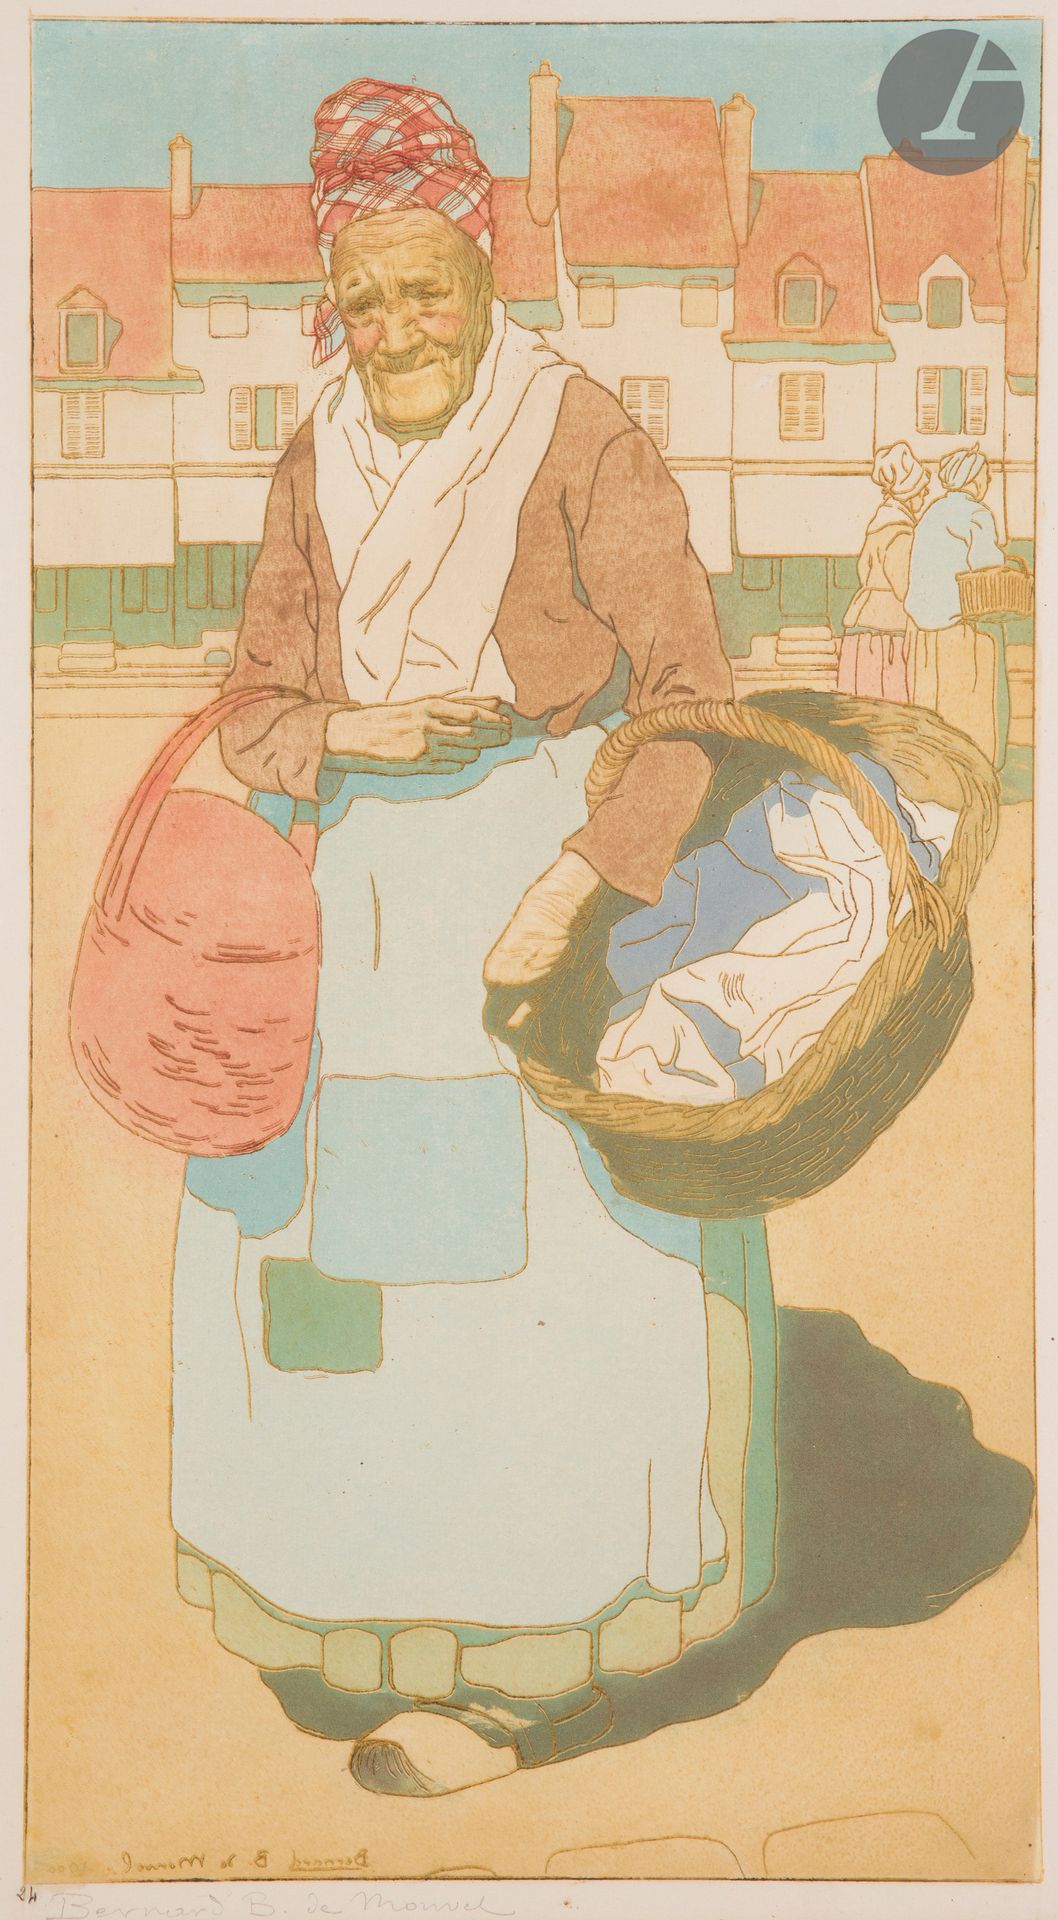 Null 伯纳德-布泰-德-蒙维尔(1881-1949)

拿着篮子的老妇人。1900.蚀刻和水印。258 x 465毫米。以彩色印刷。牛皮纸上非常漂亮的样张，&hellip;